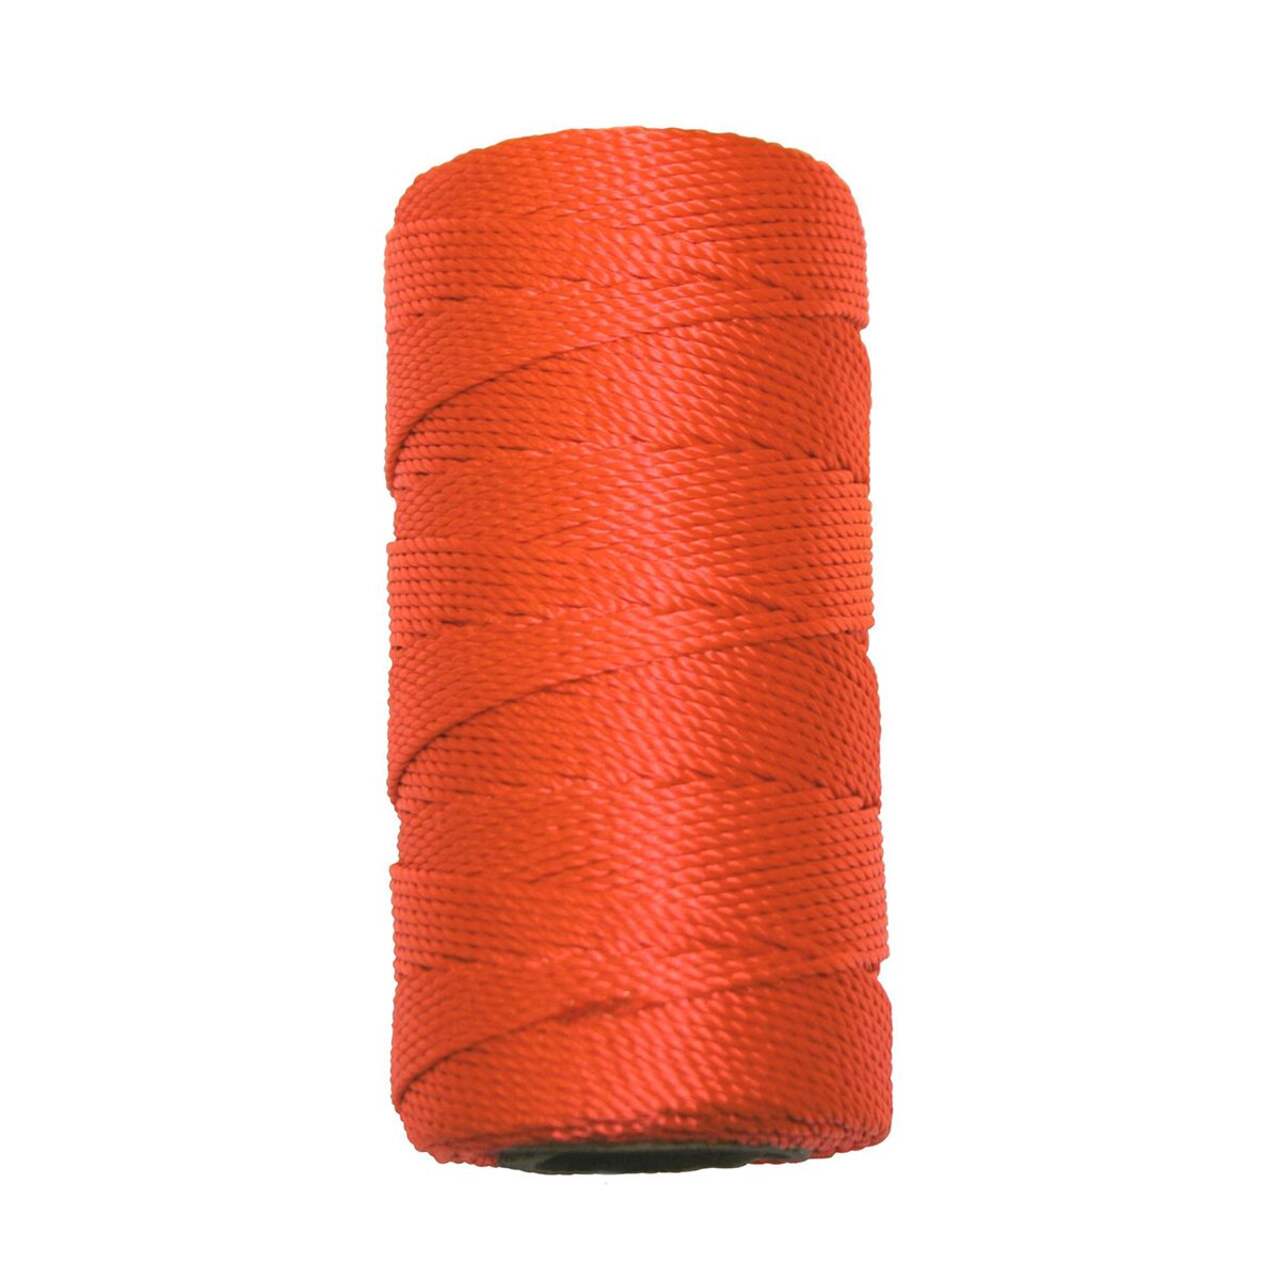 Ben-Mor Mason's Line Twisted Rope, Orange, #18 x 250-ft